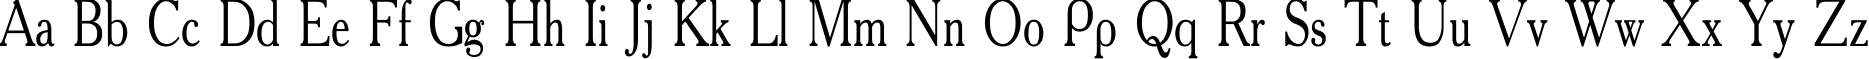 Пример написания английского алфавита шрифтом Academy Condensed